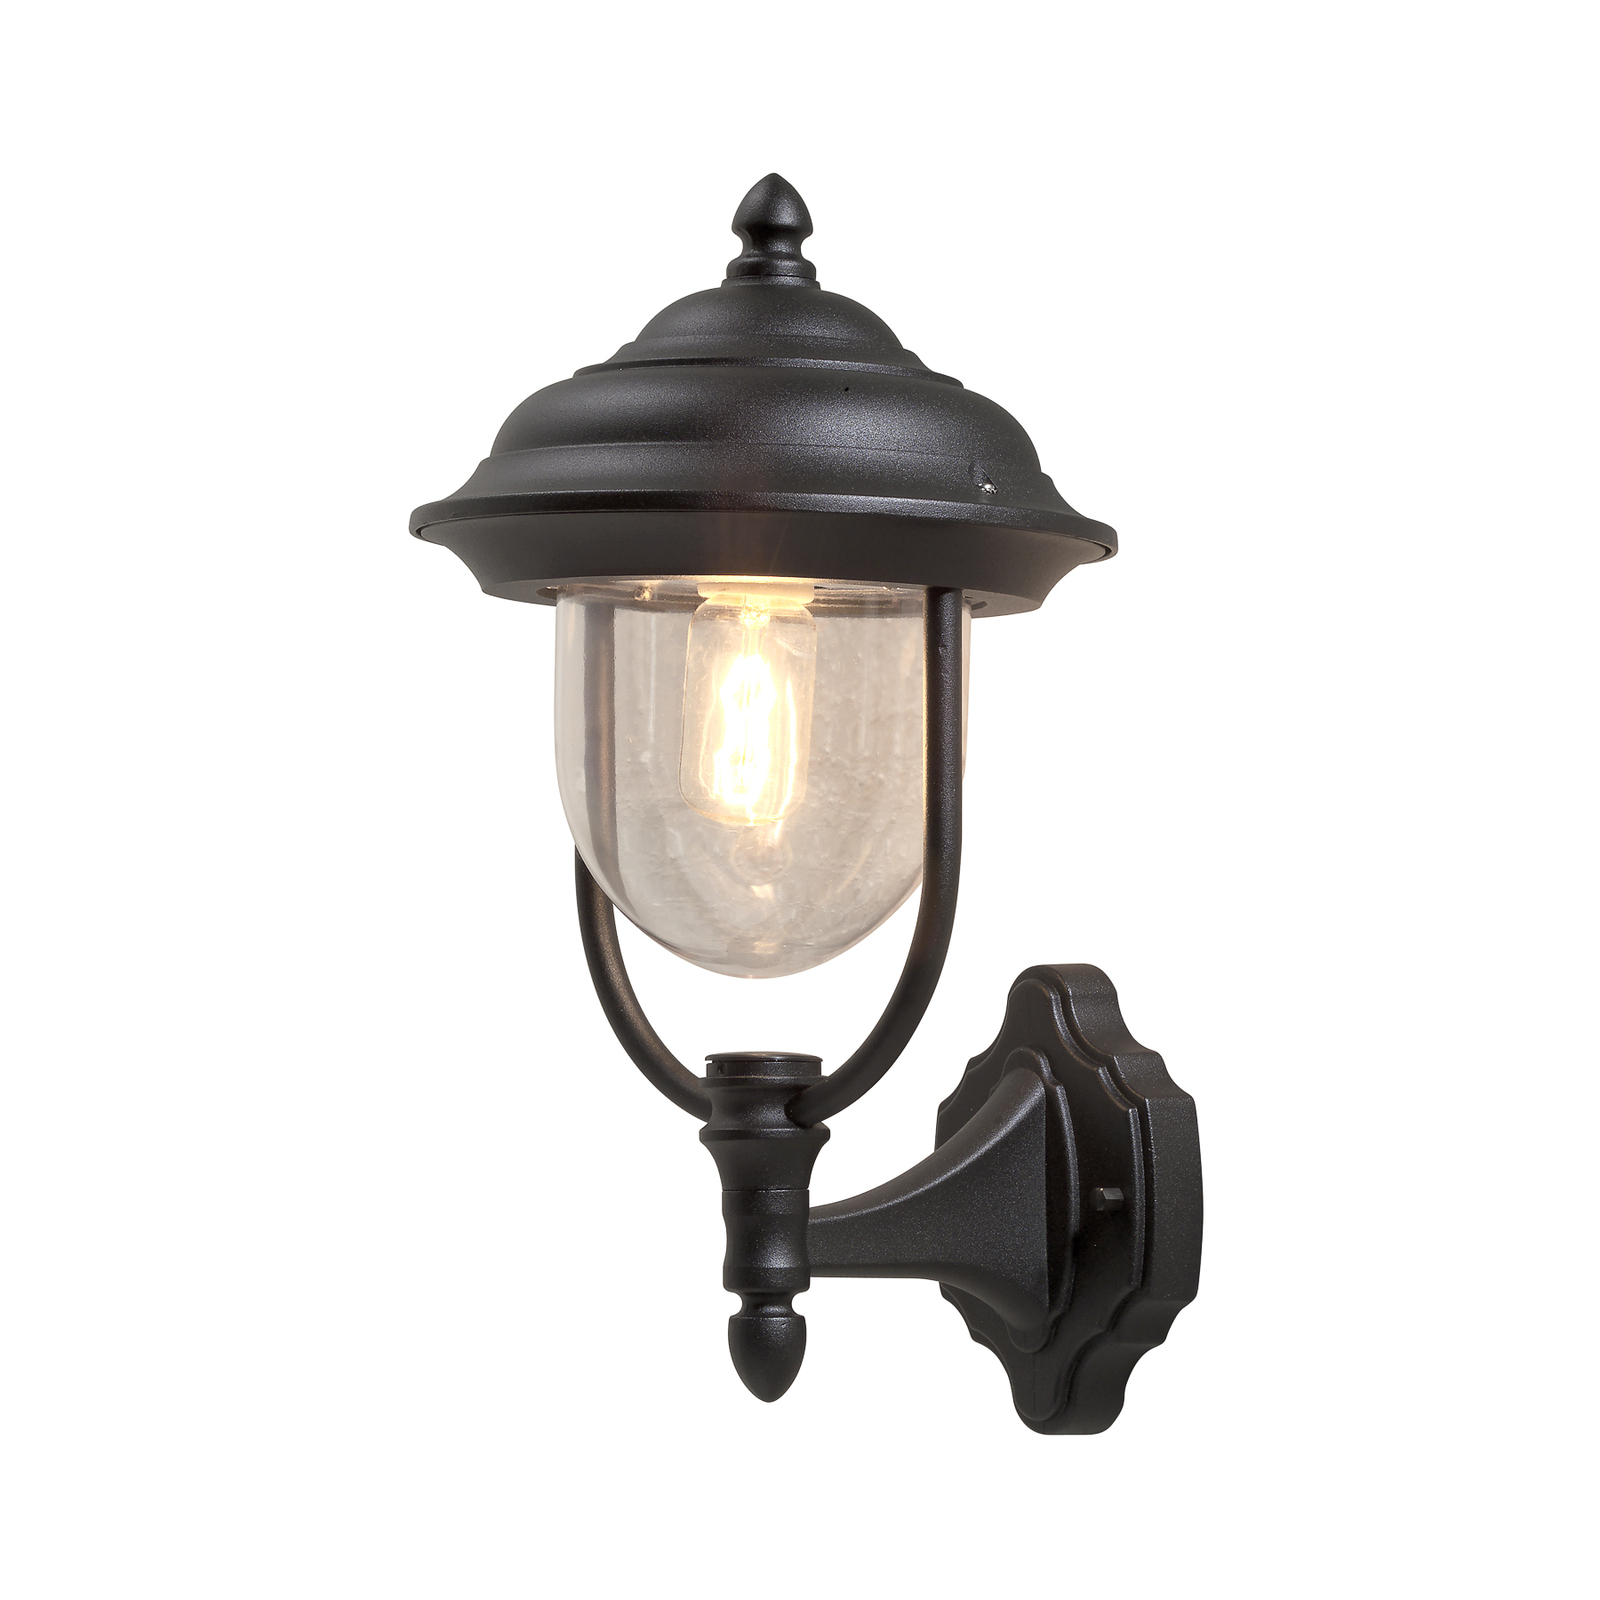 Parma outdoor wall light, standing lantern, black